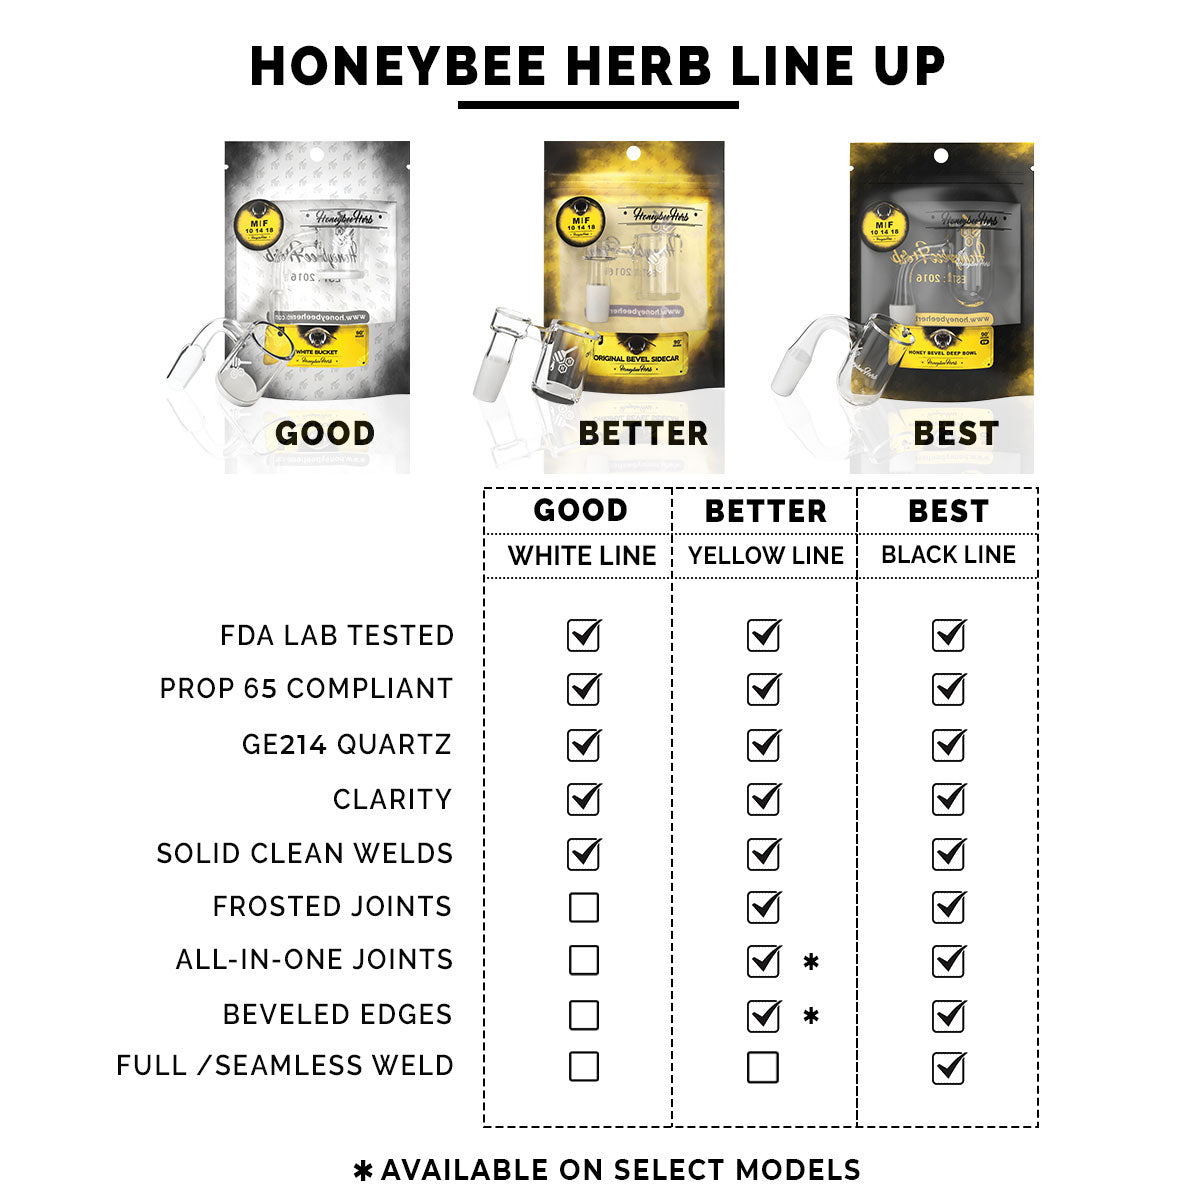 Honeybee Herb Quartz Banger Quality Chart showcasing features for Good, Better, Best lines